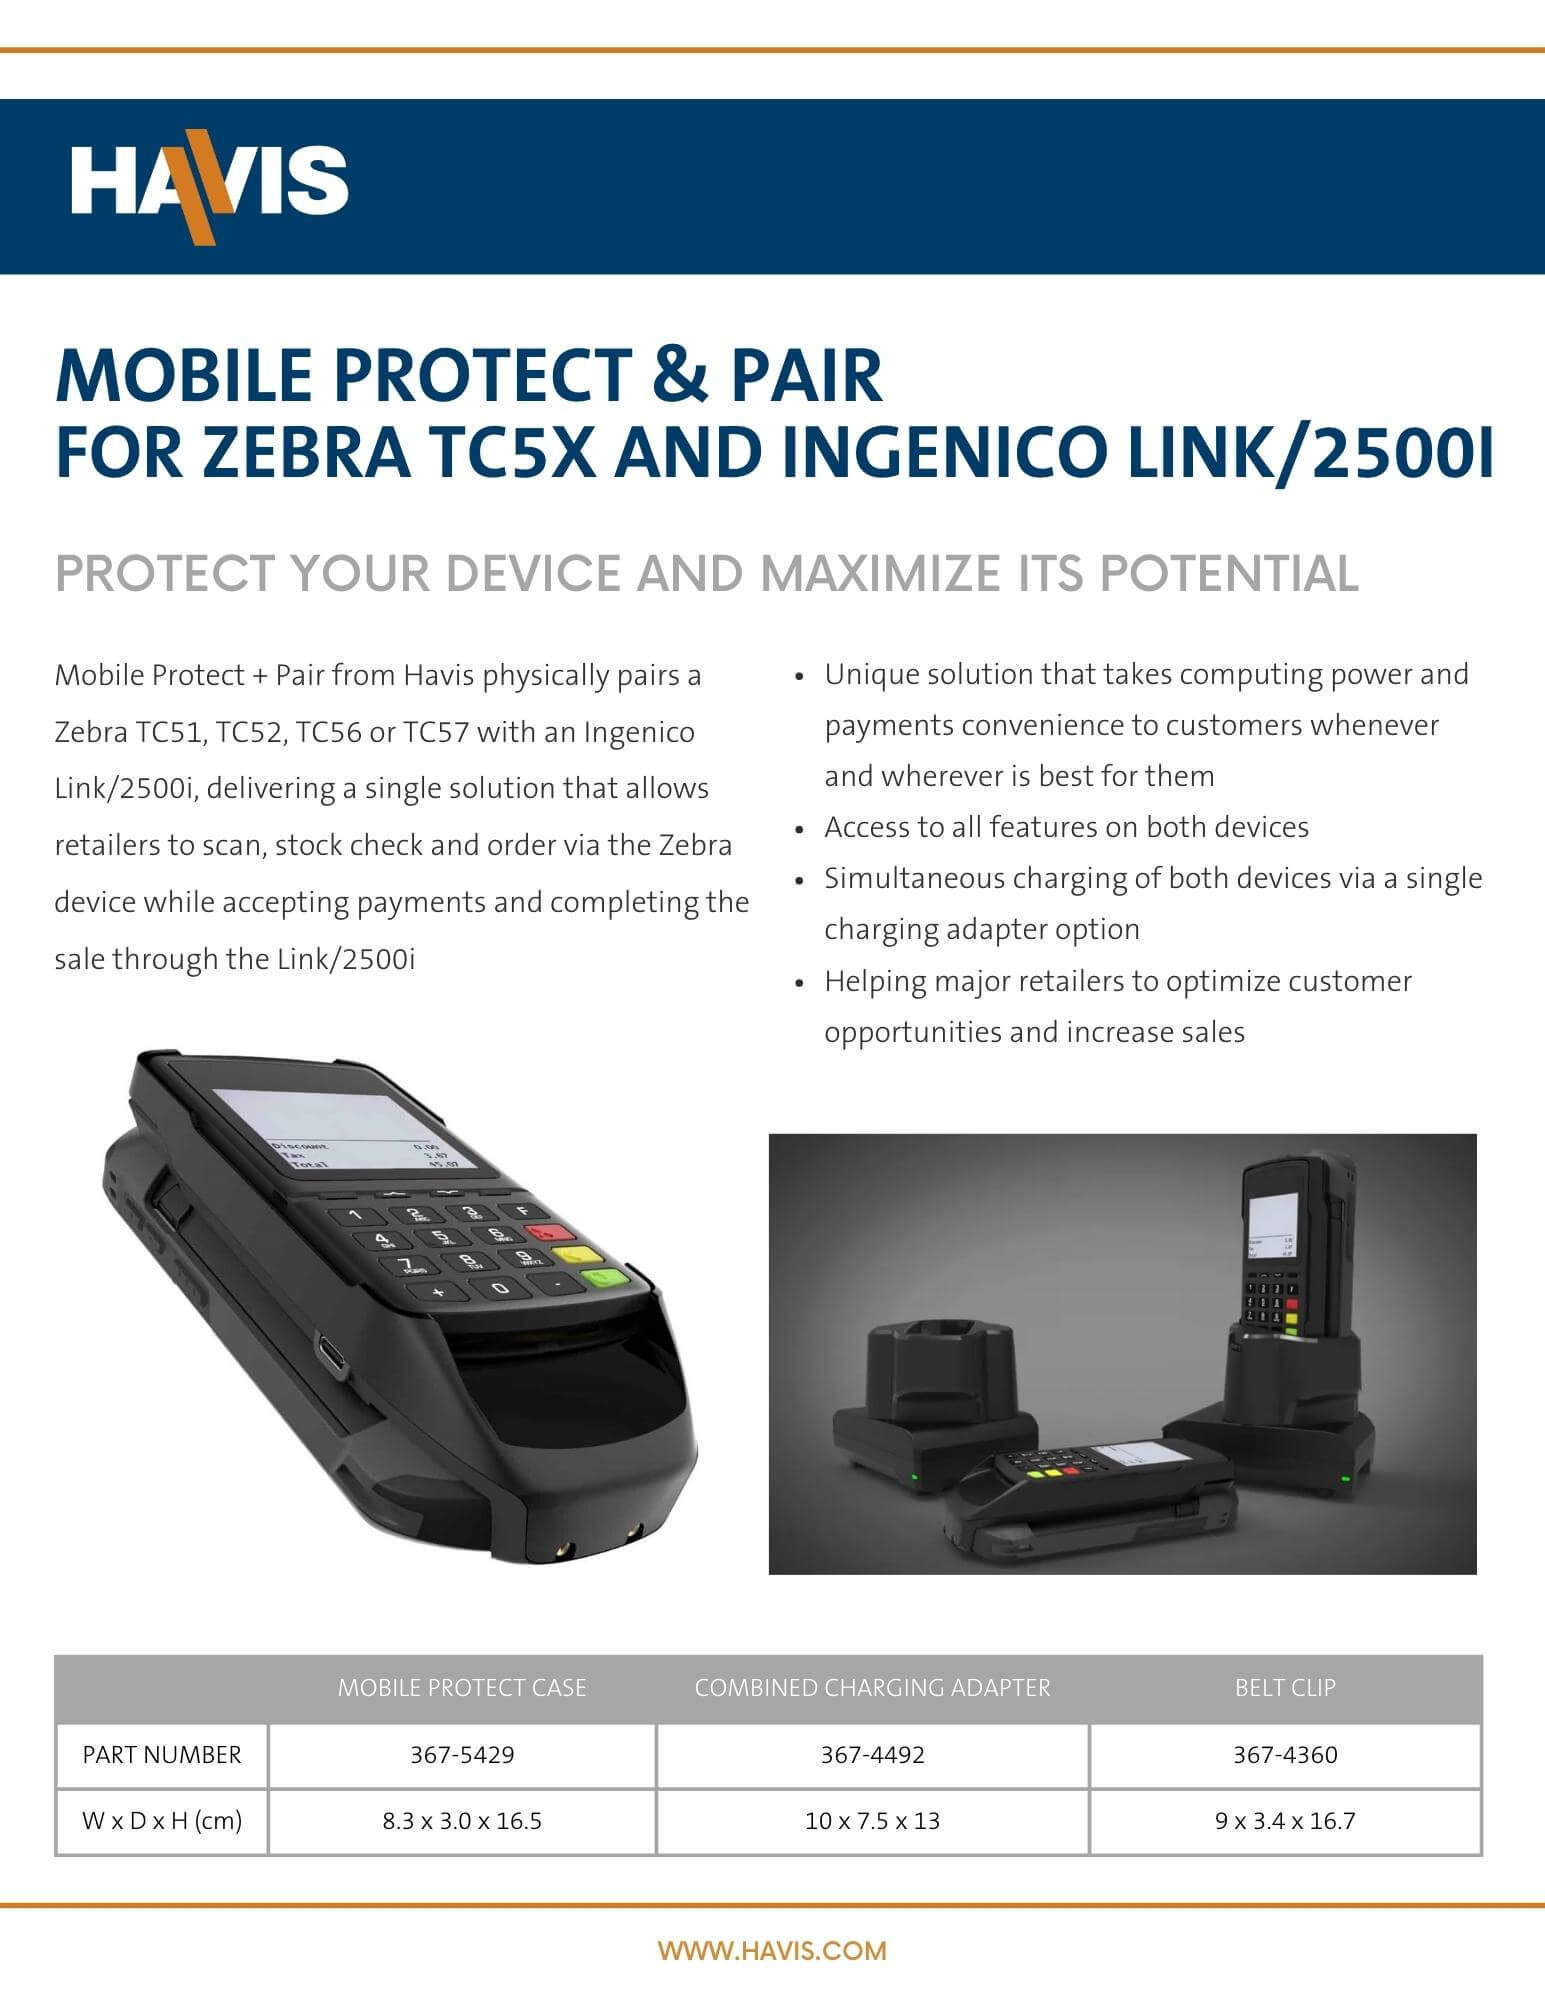 Mobile Protect & Pair for Zebra TC5X and Ingenico Link2500i - Datasheet